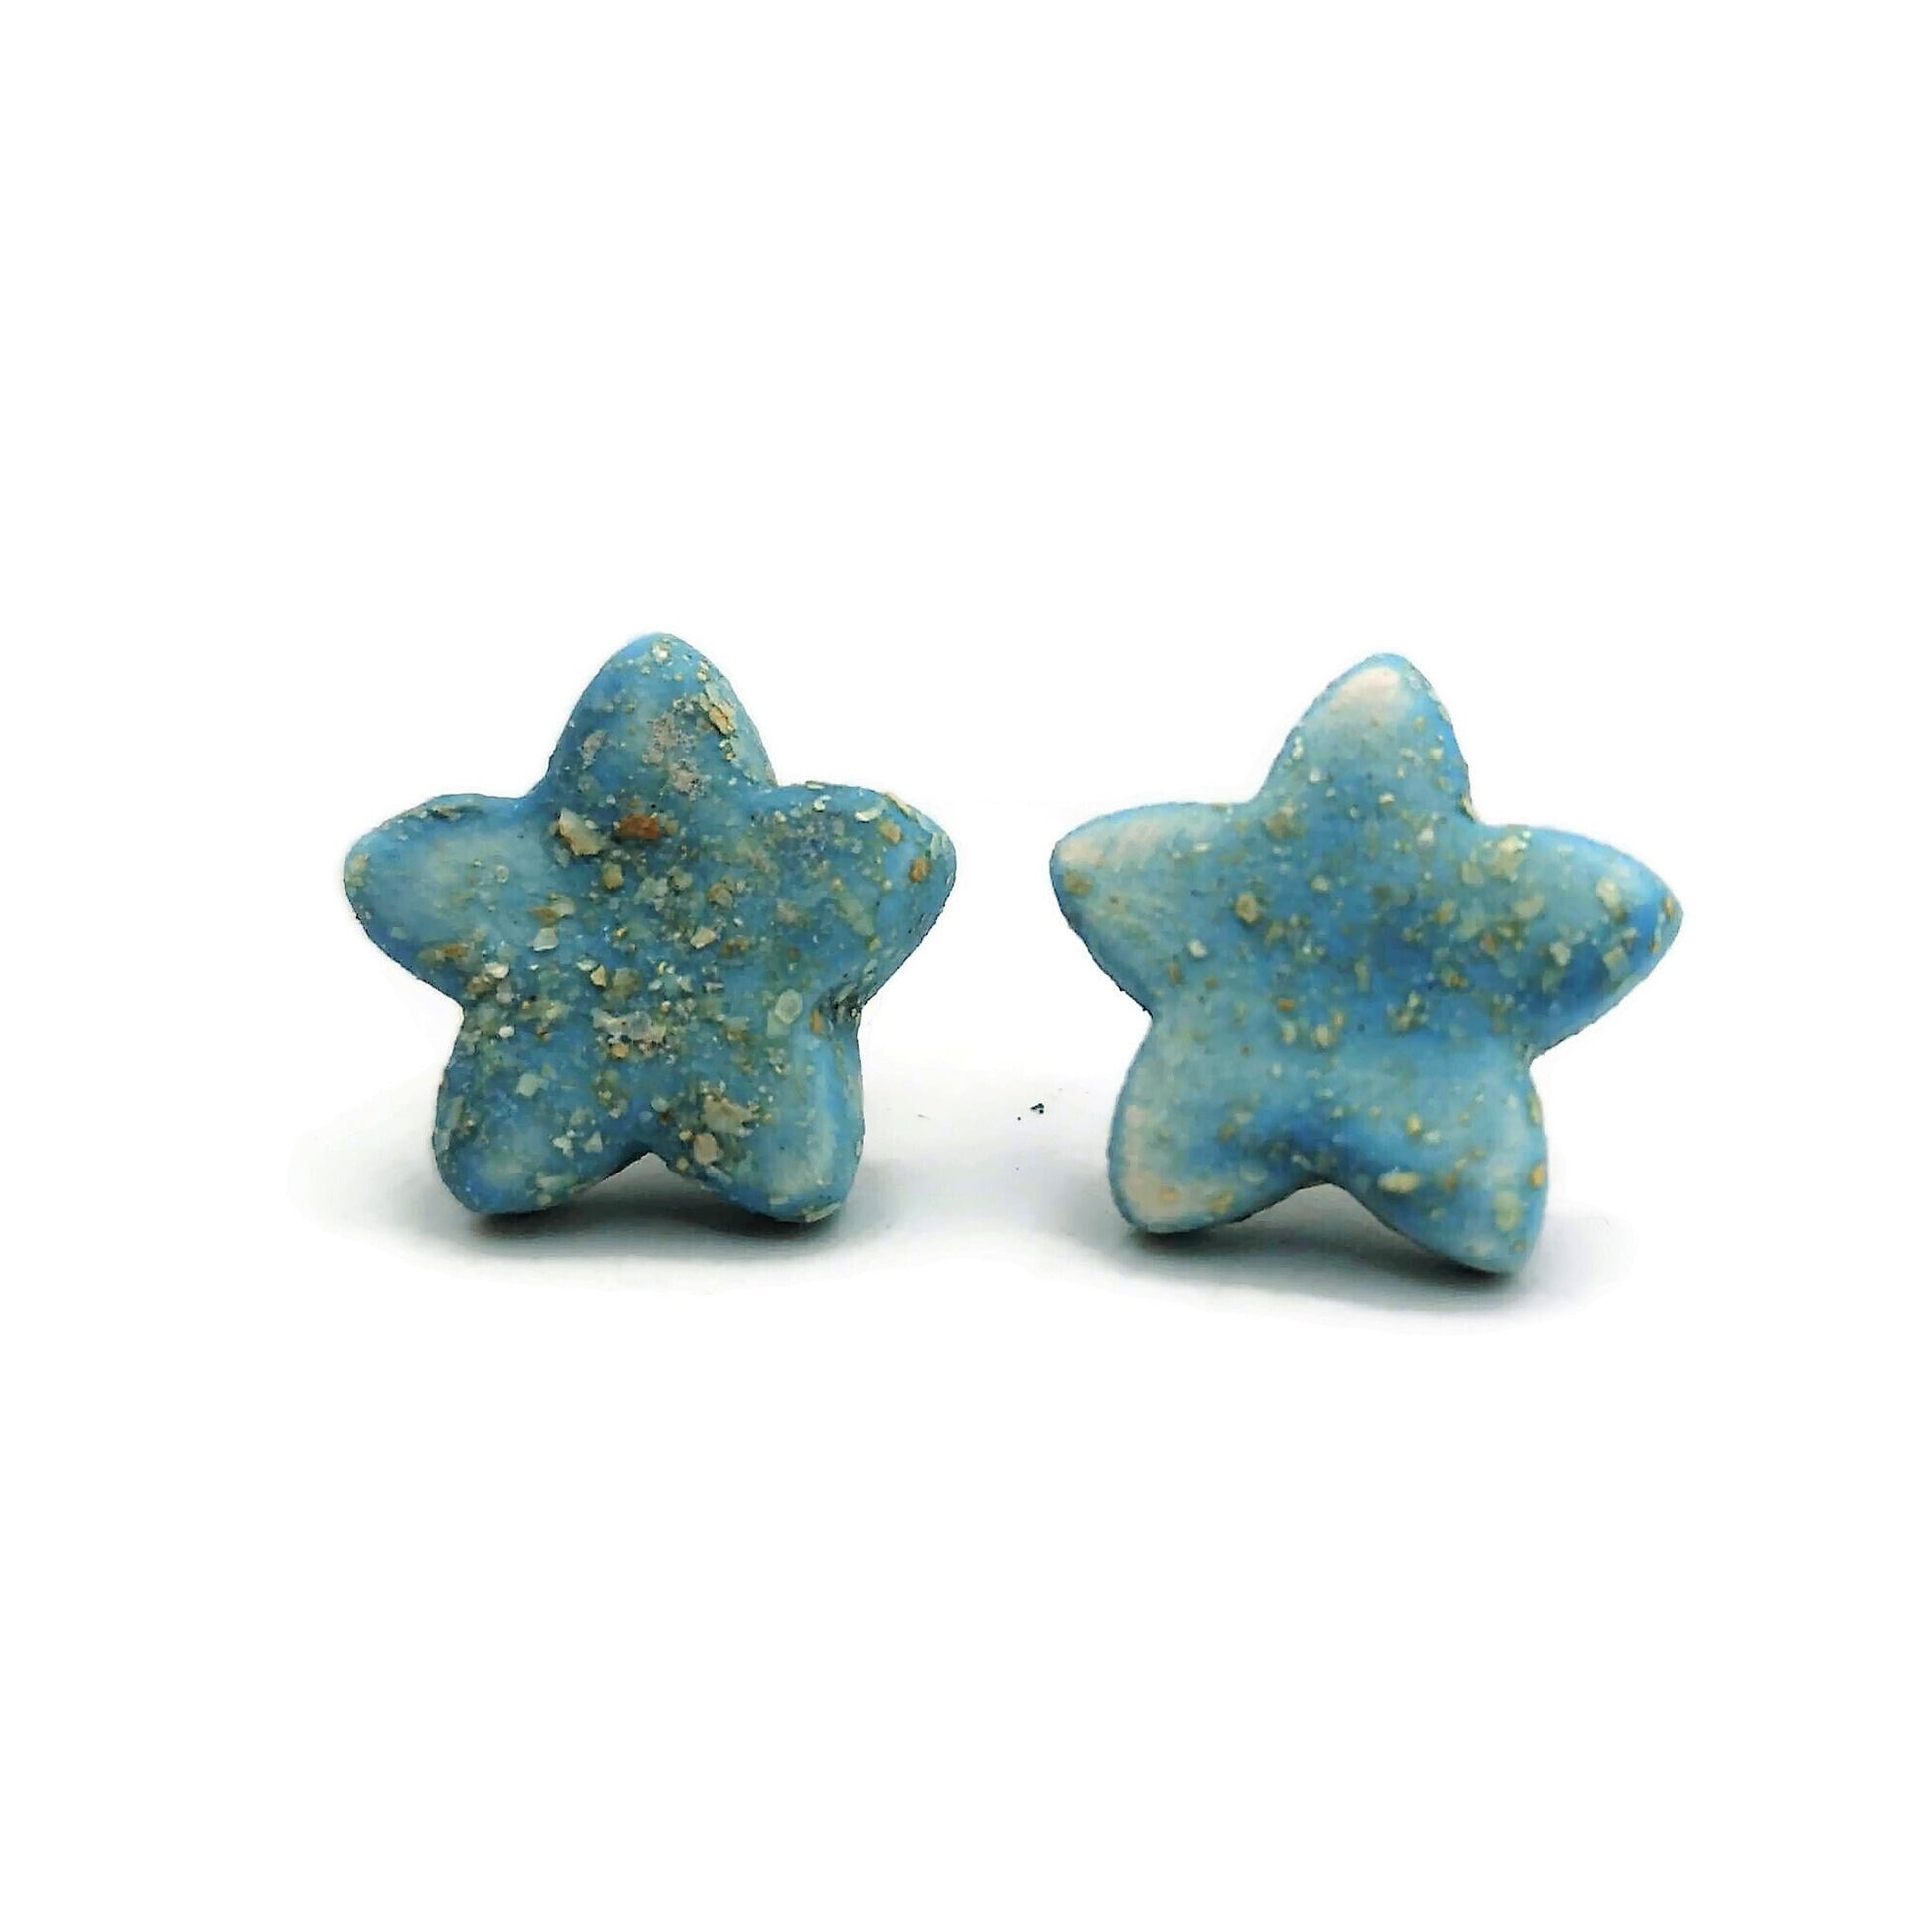 DAINTY STAR EARRINGS, Turquoise Studs, Geometric Star Earrings, Minimalist Clay Stud Earrings Small, Handmade Ceramic Stocking Stuffers - Ceramica Ana Rafael